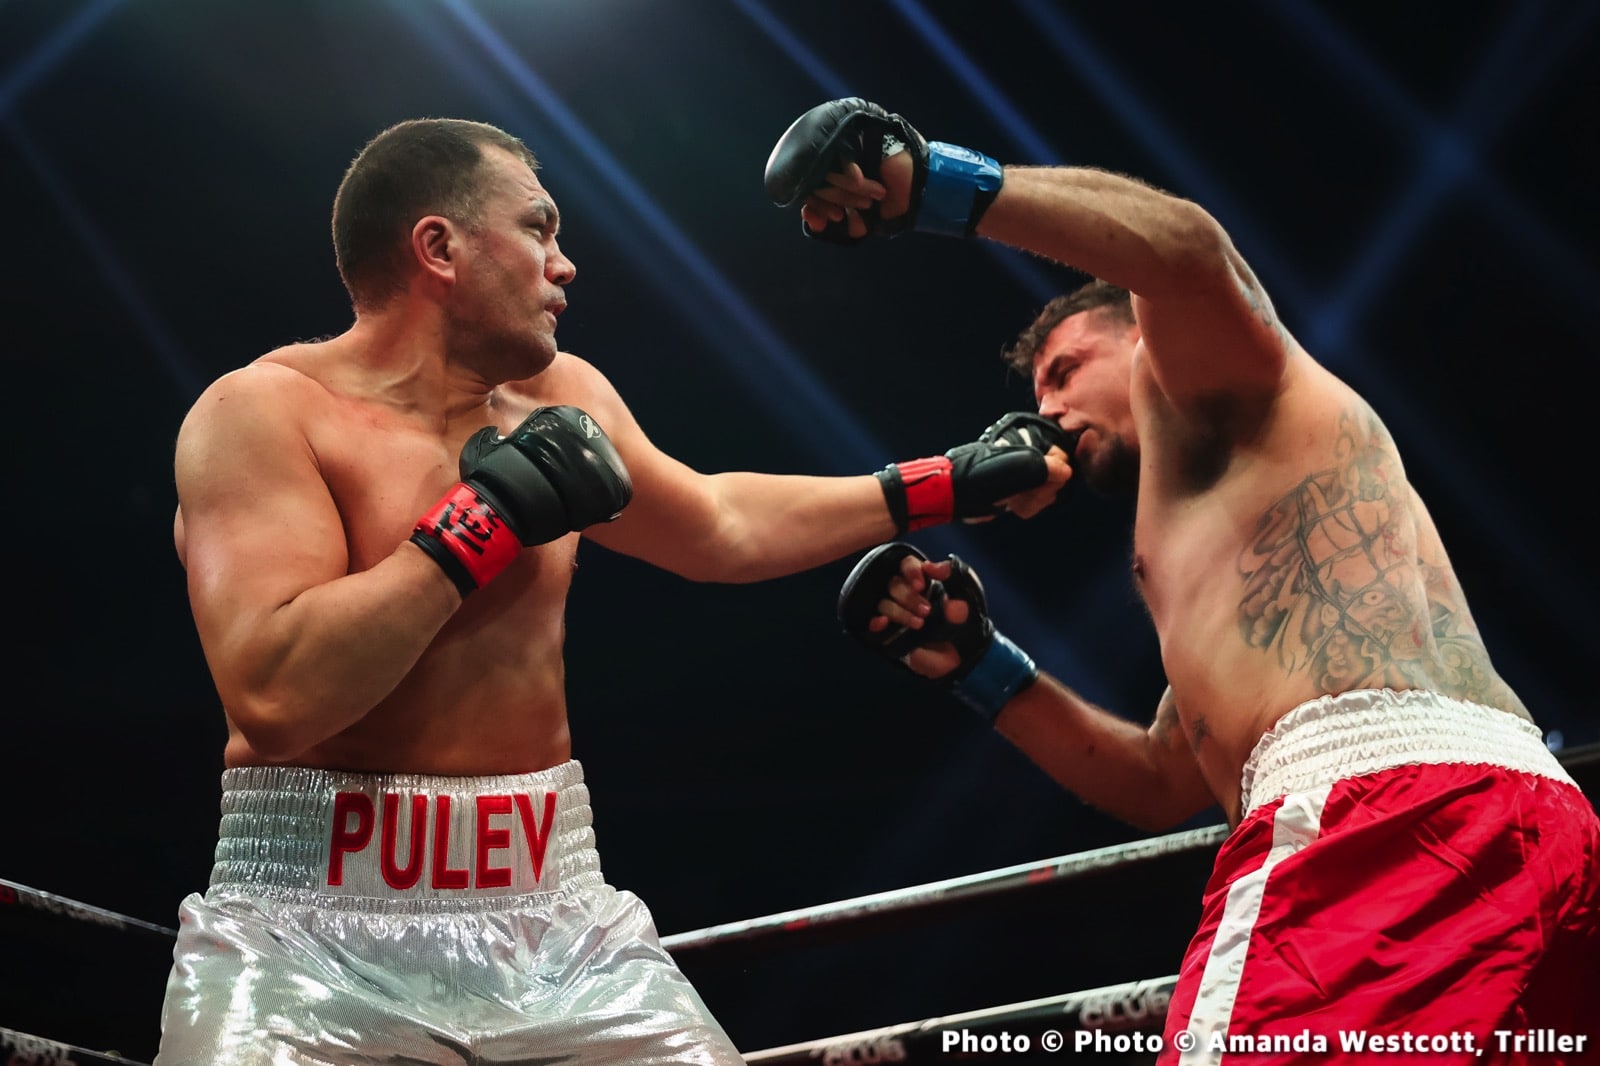 Kubrat Pulev boxing image / photo